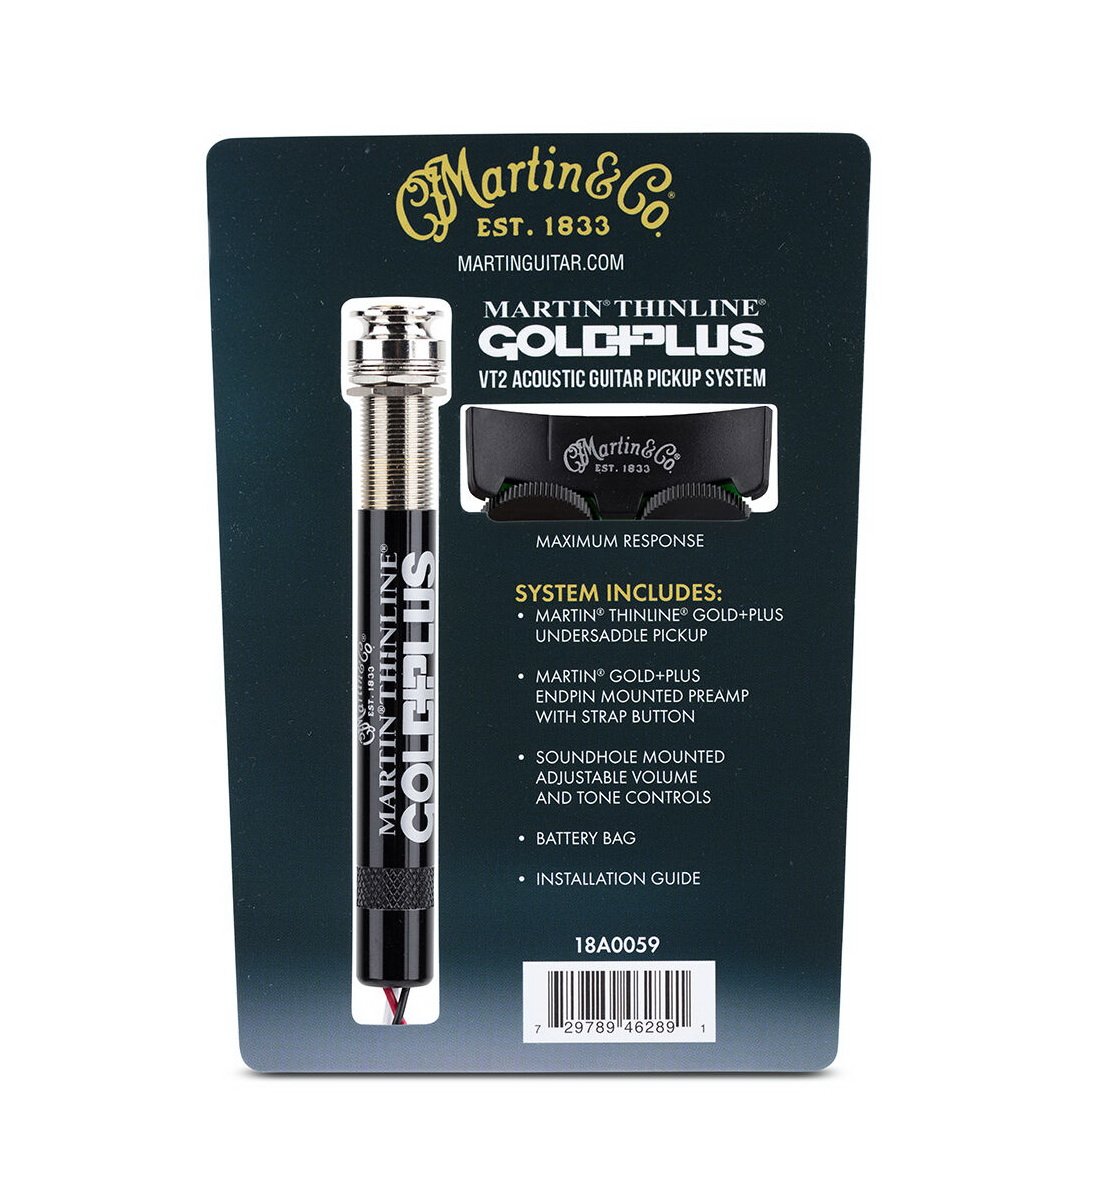 Martin Thinline Gold Plus VTII Pickup